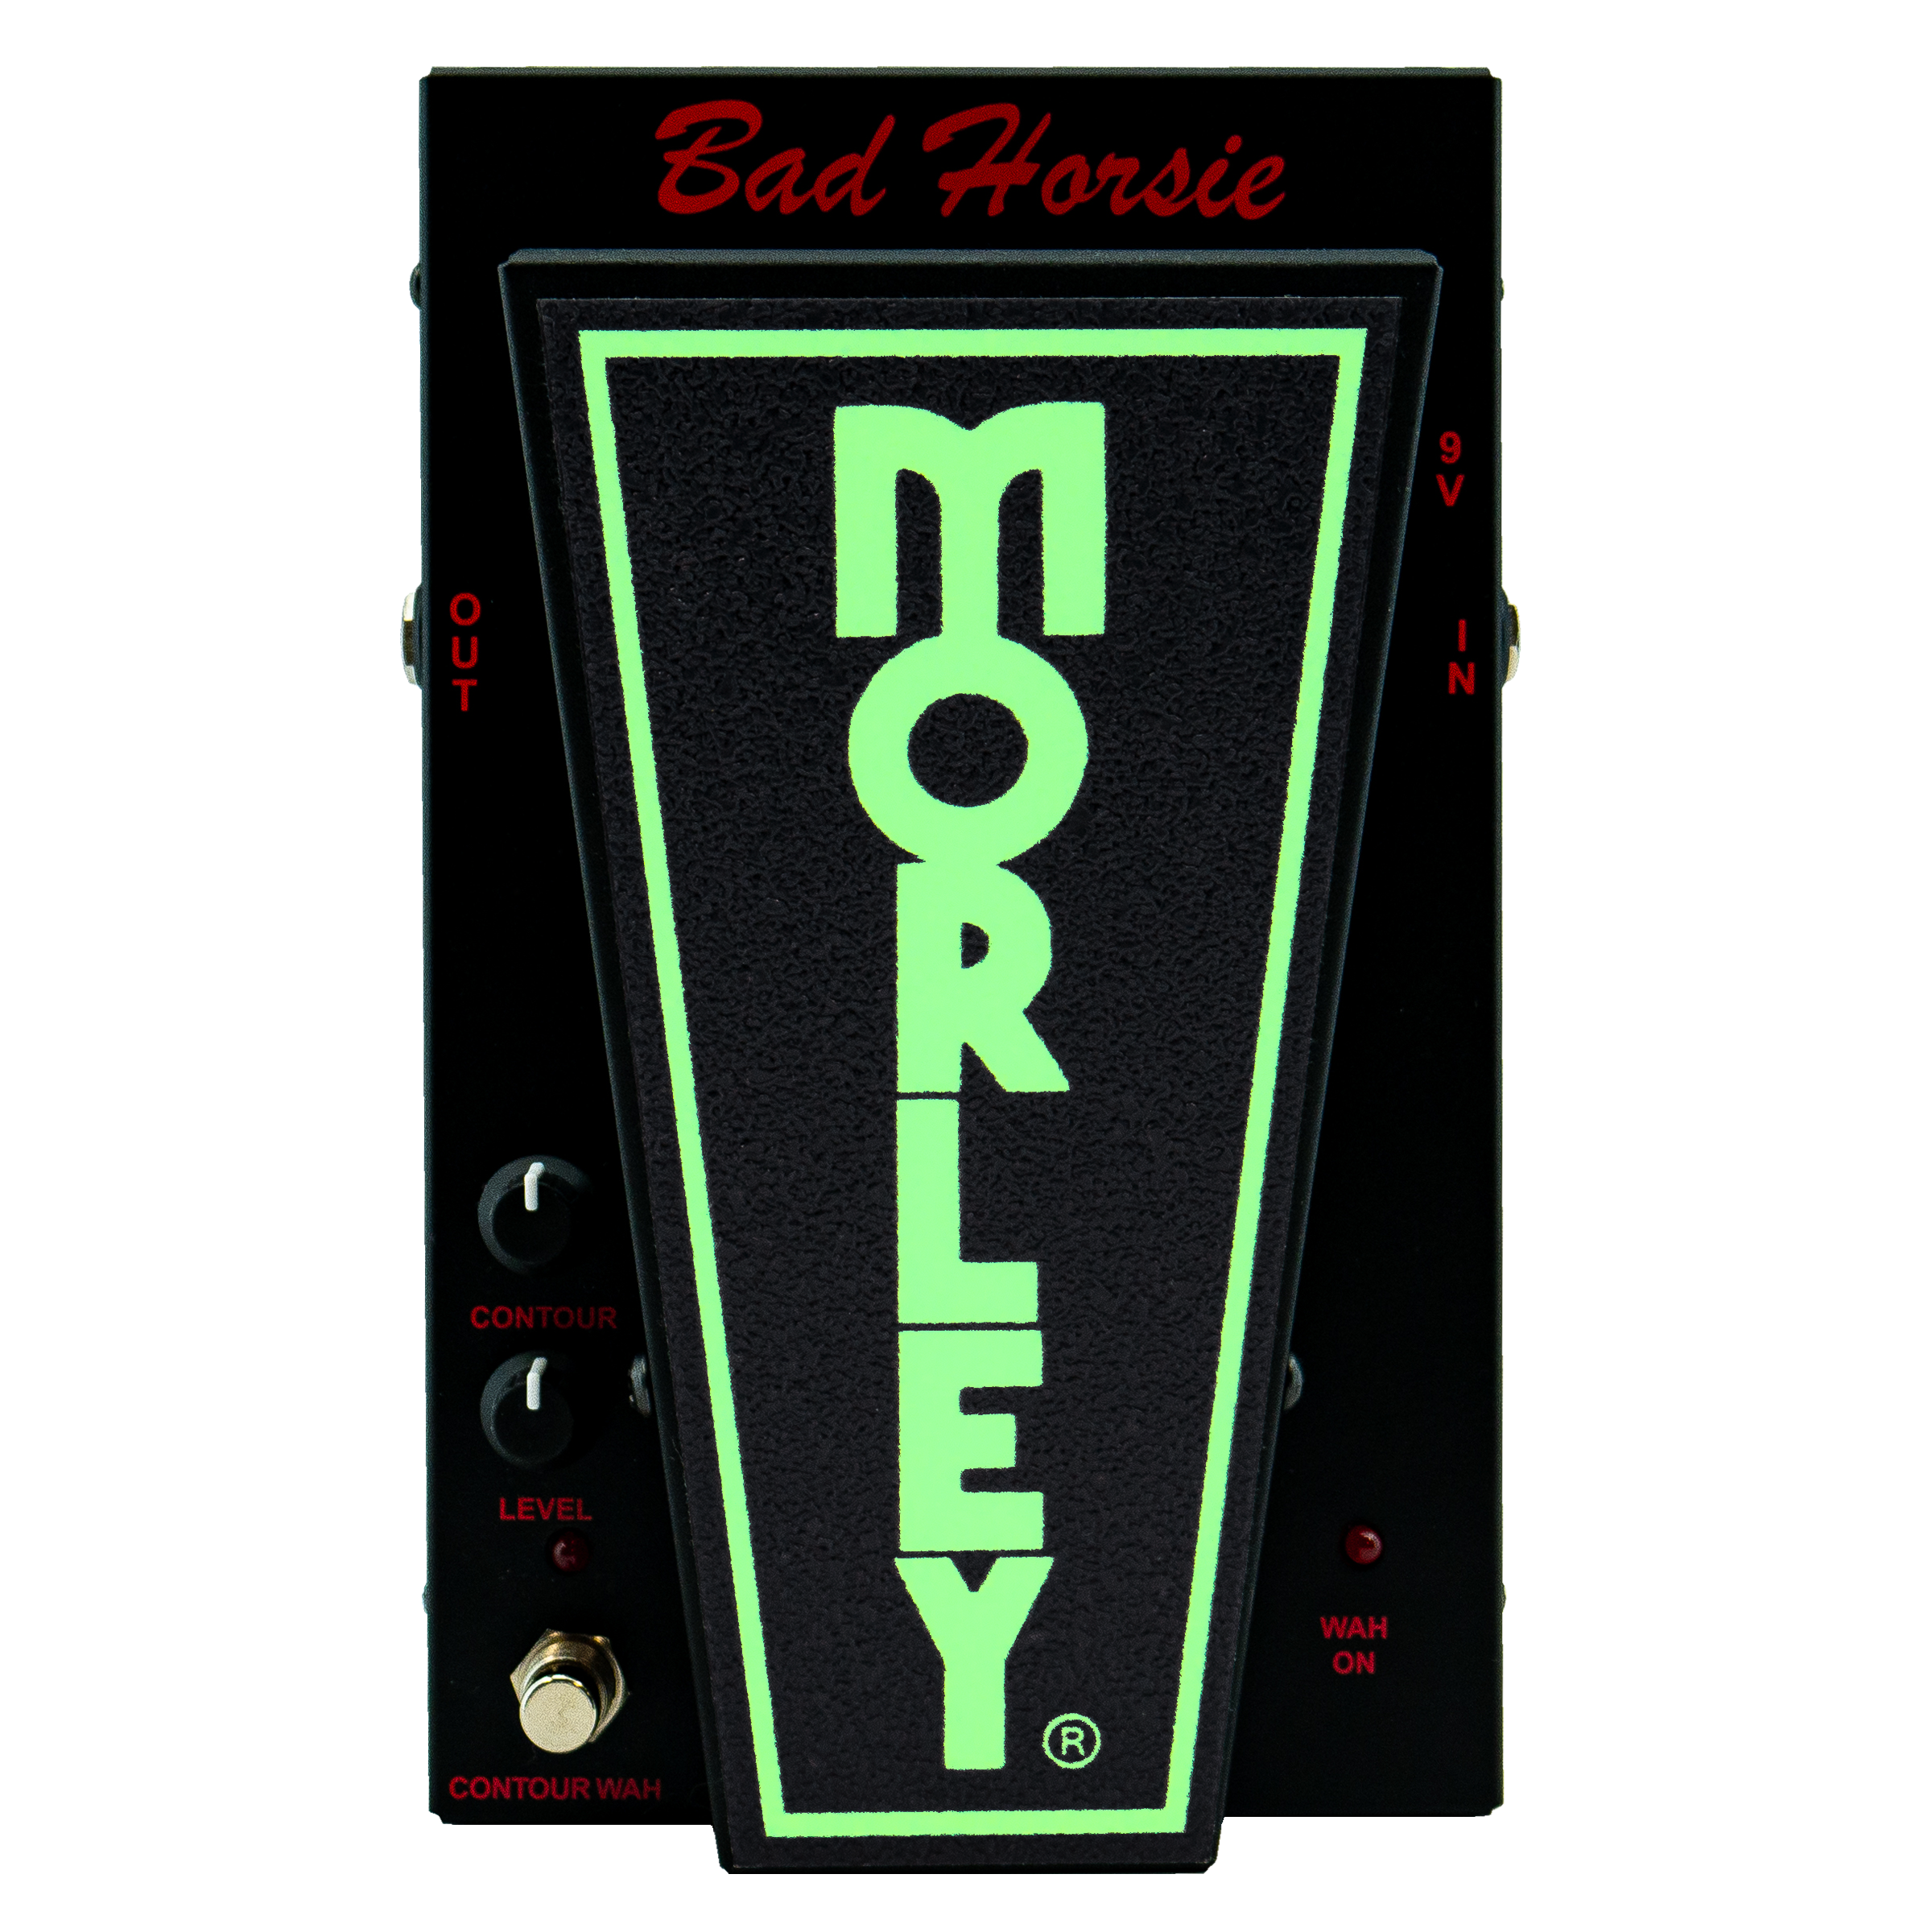 Morley Bad Horsie Classic Wah - Wah & filter effect pedal - Variation 3